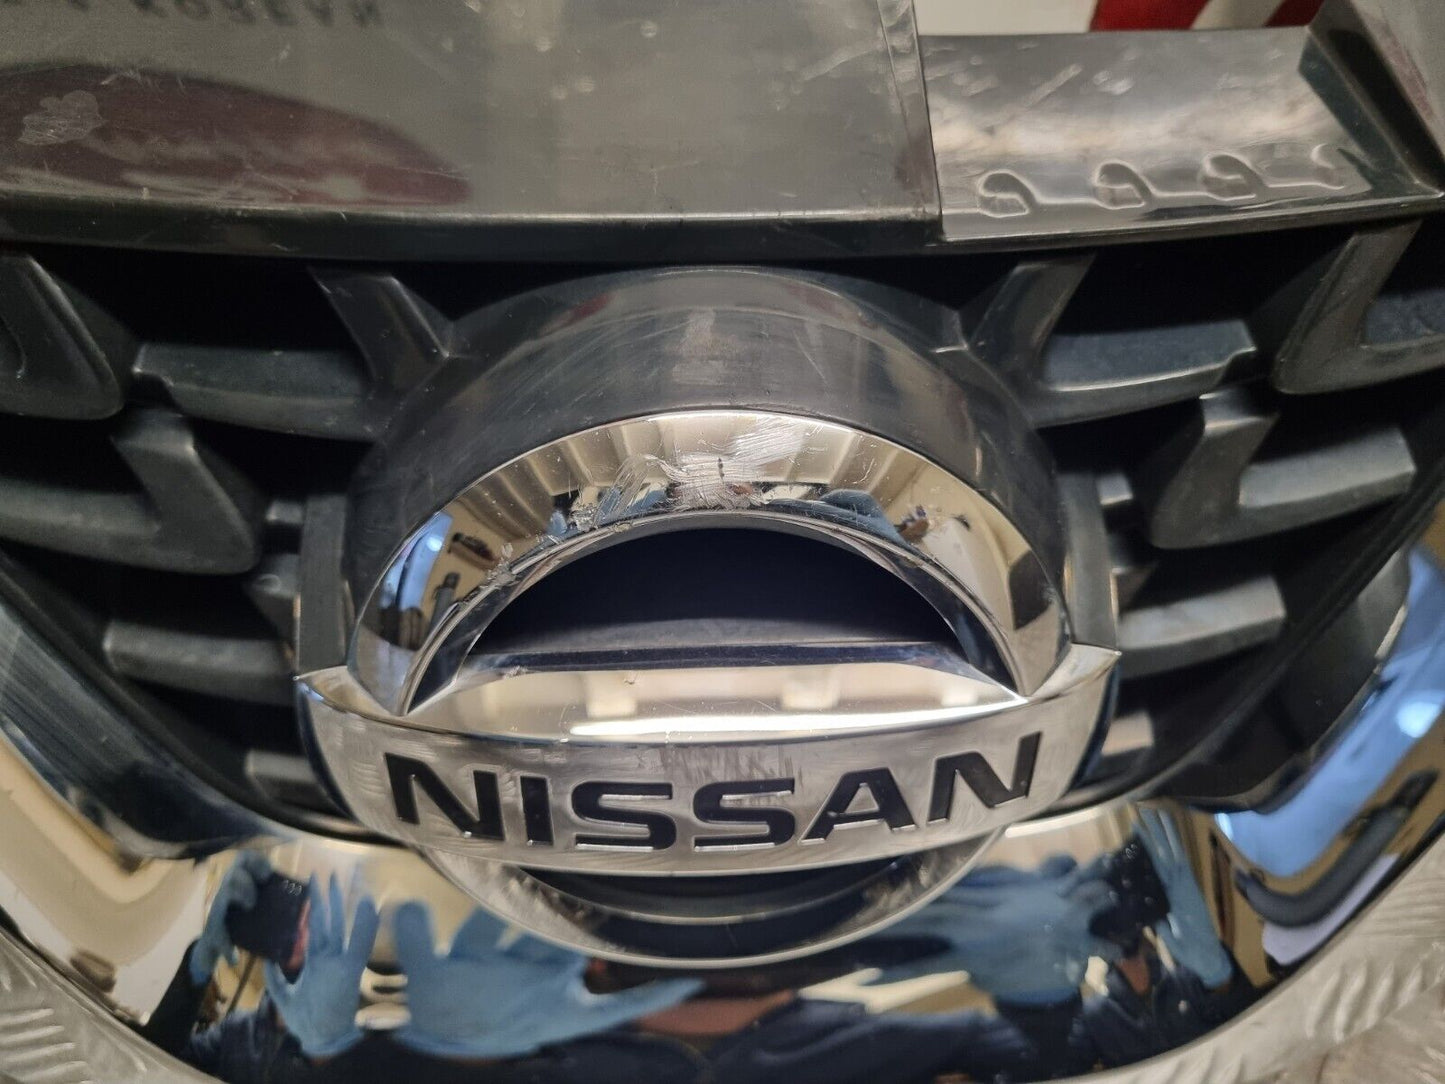 NISSAN JUKE 2014-2019 F15 FACELIFT GENUINE FRONT BUMPER CHROME NON-CAMERA GRILLE